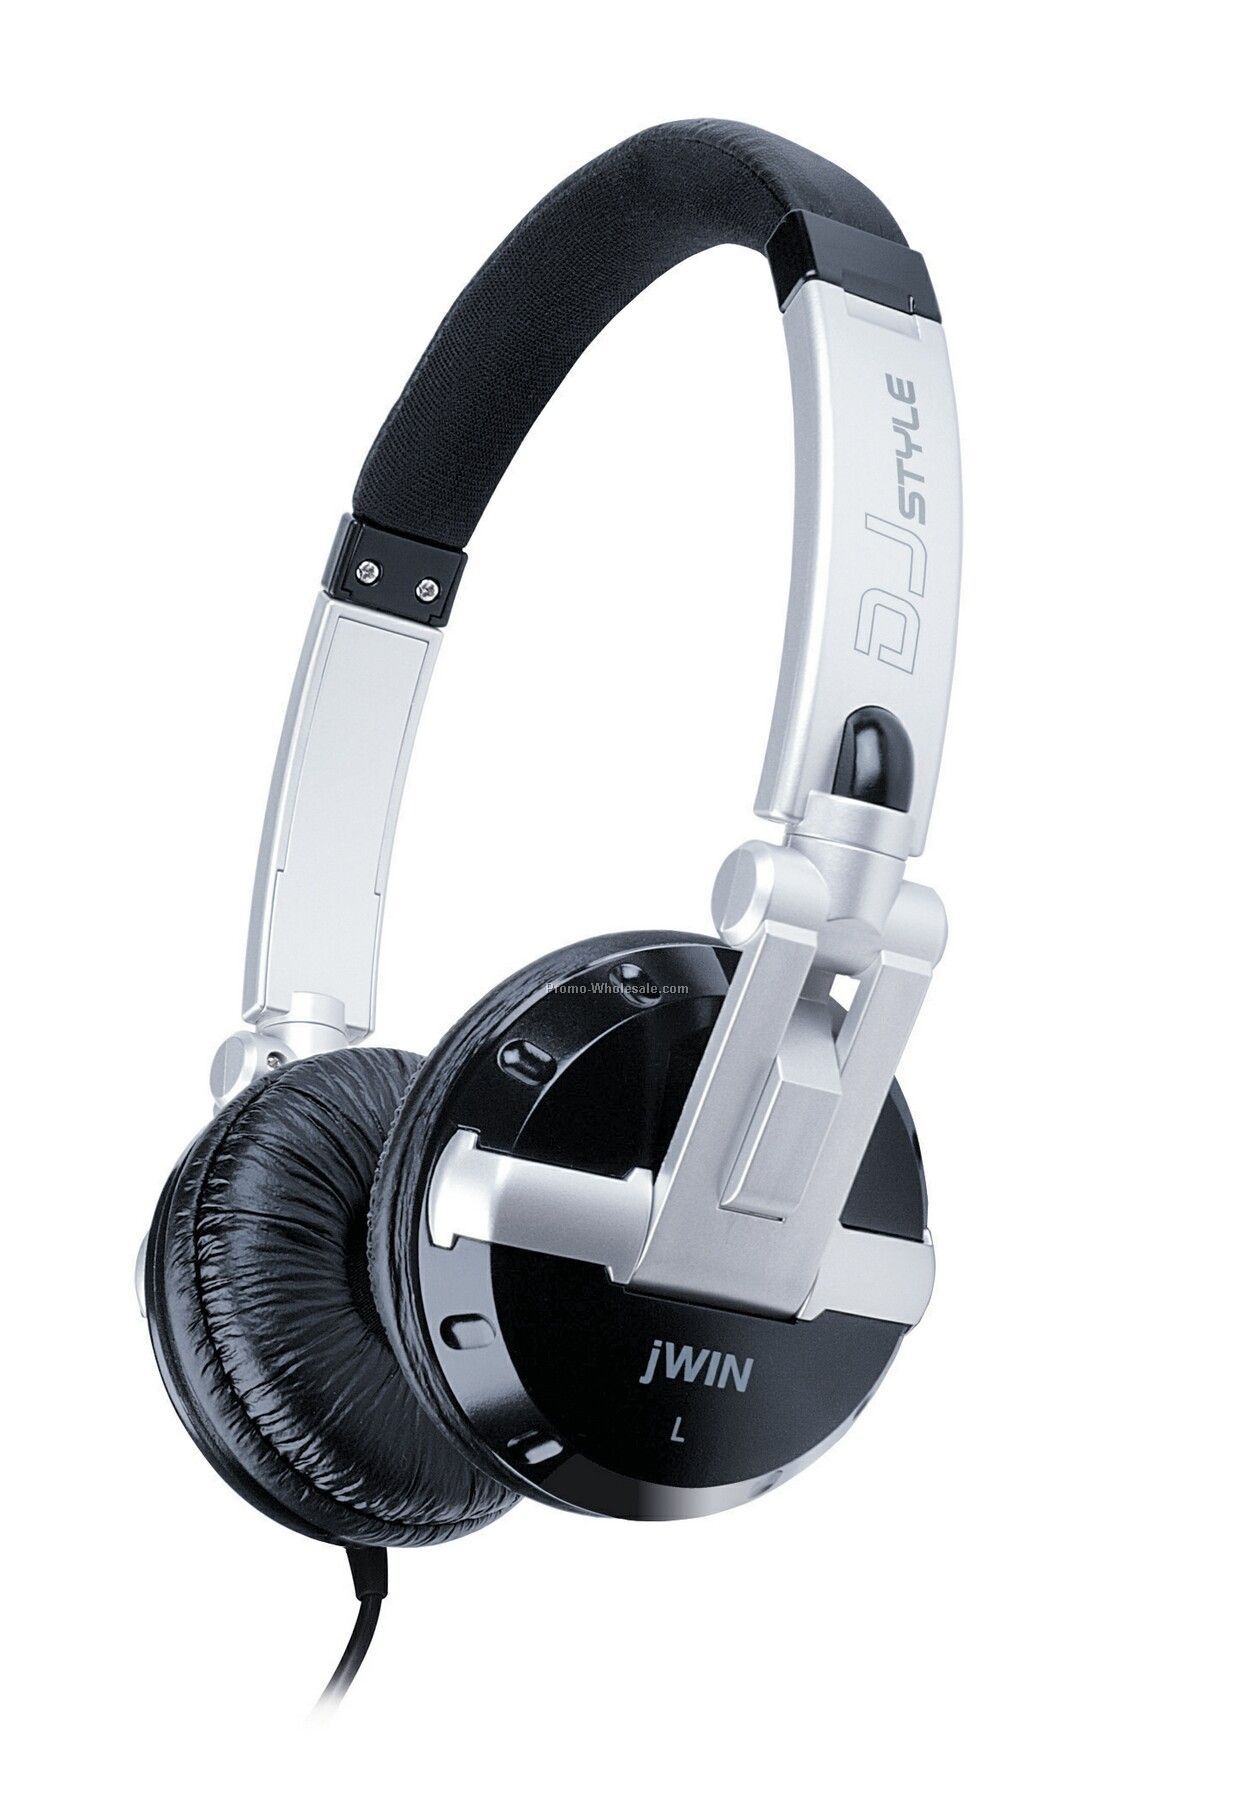 Jwin Digital Hi-fi Performance Stereo Headphone